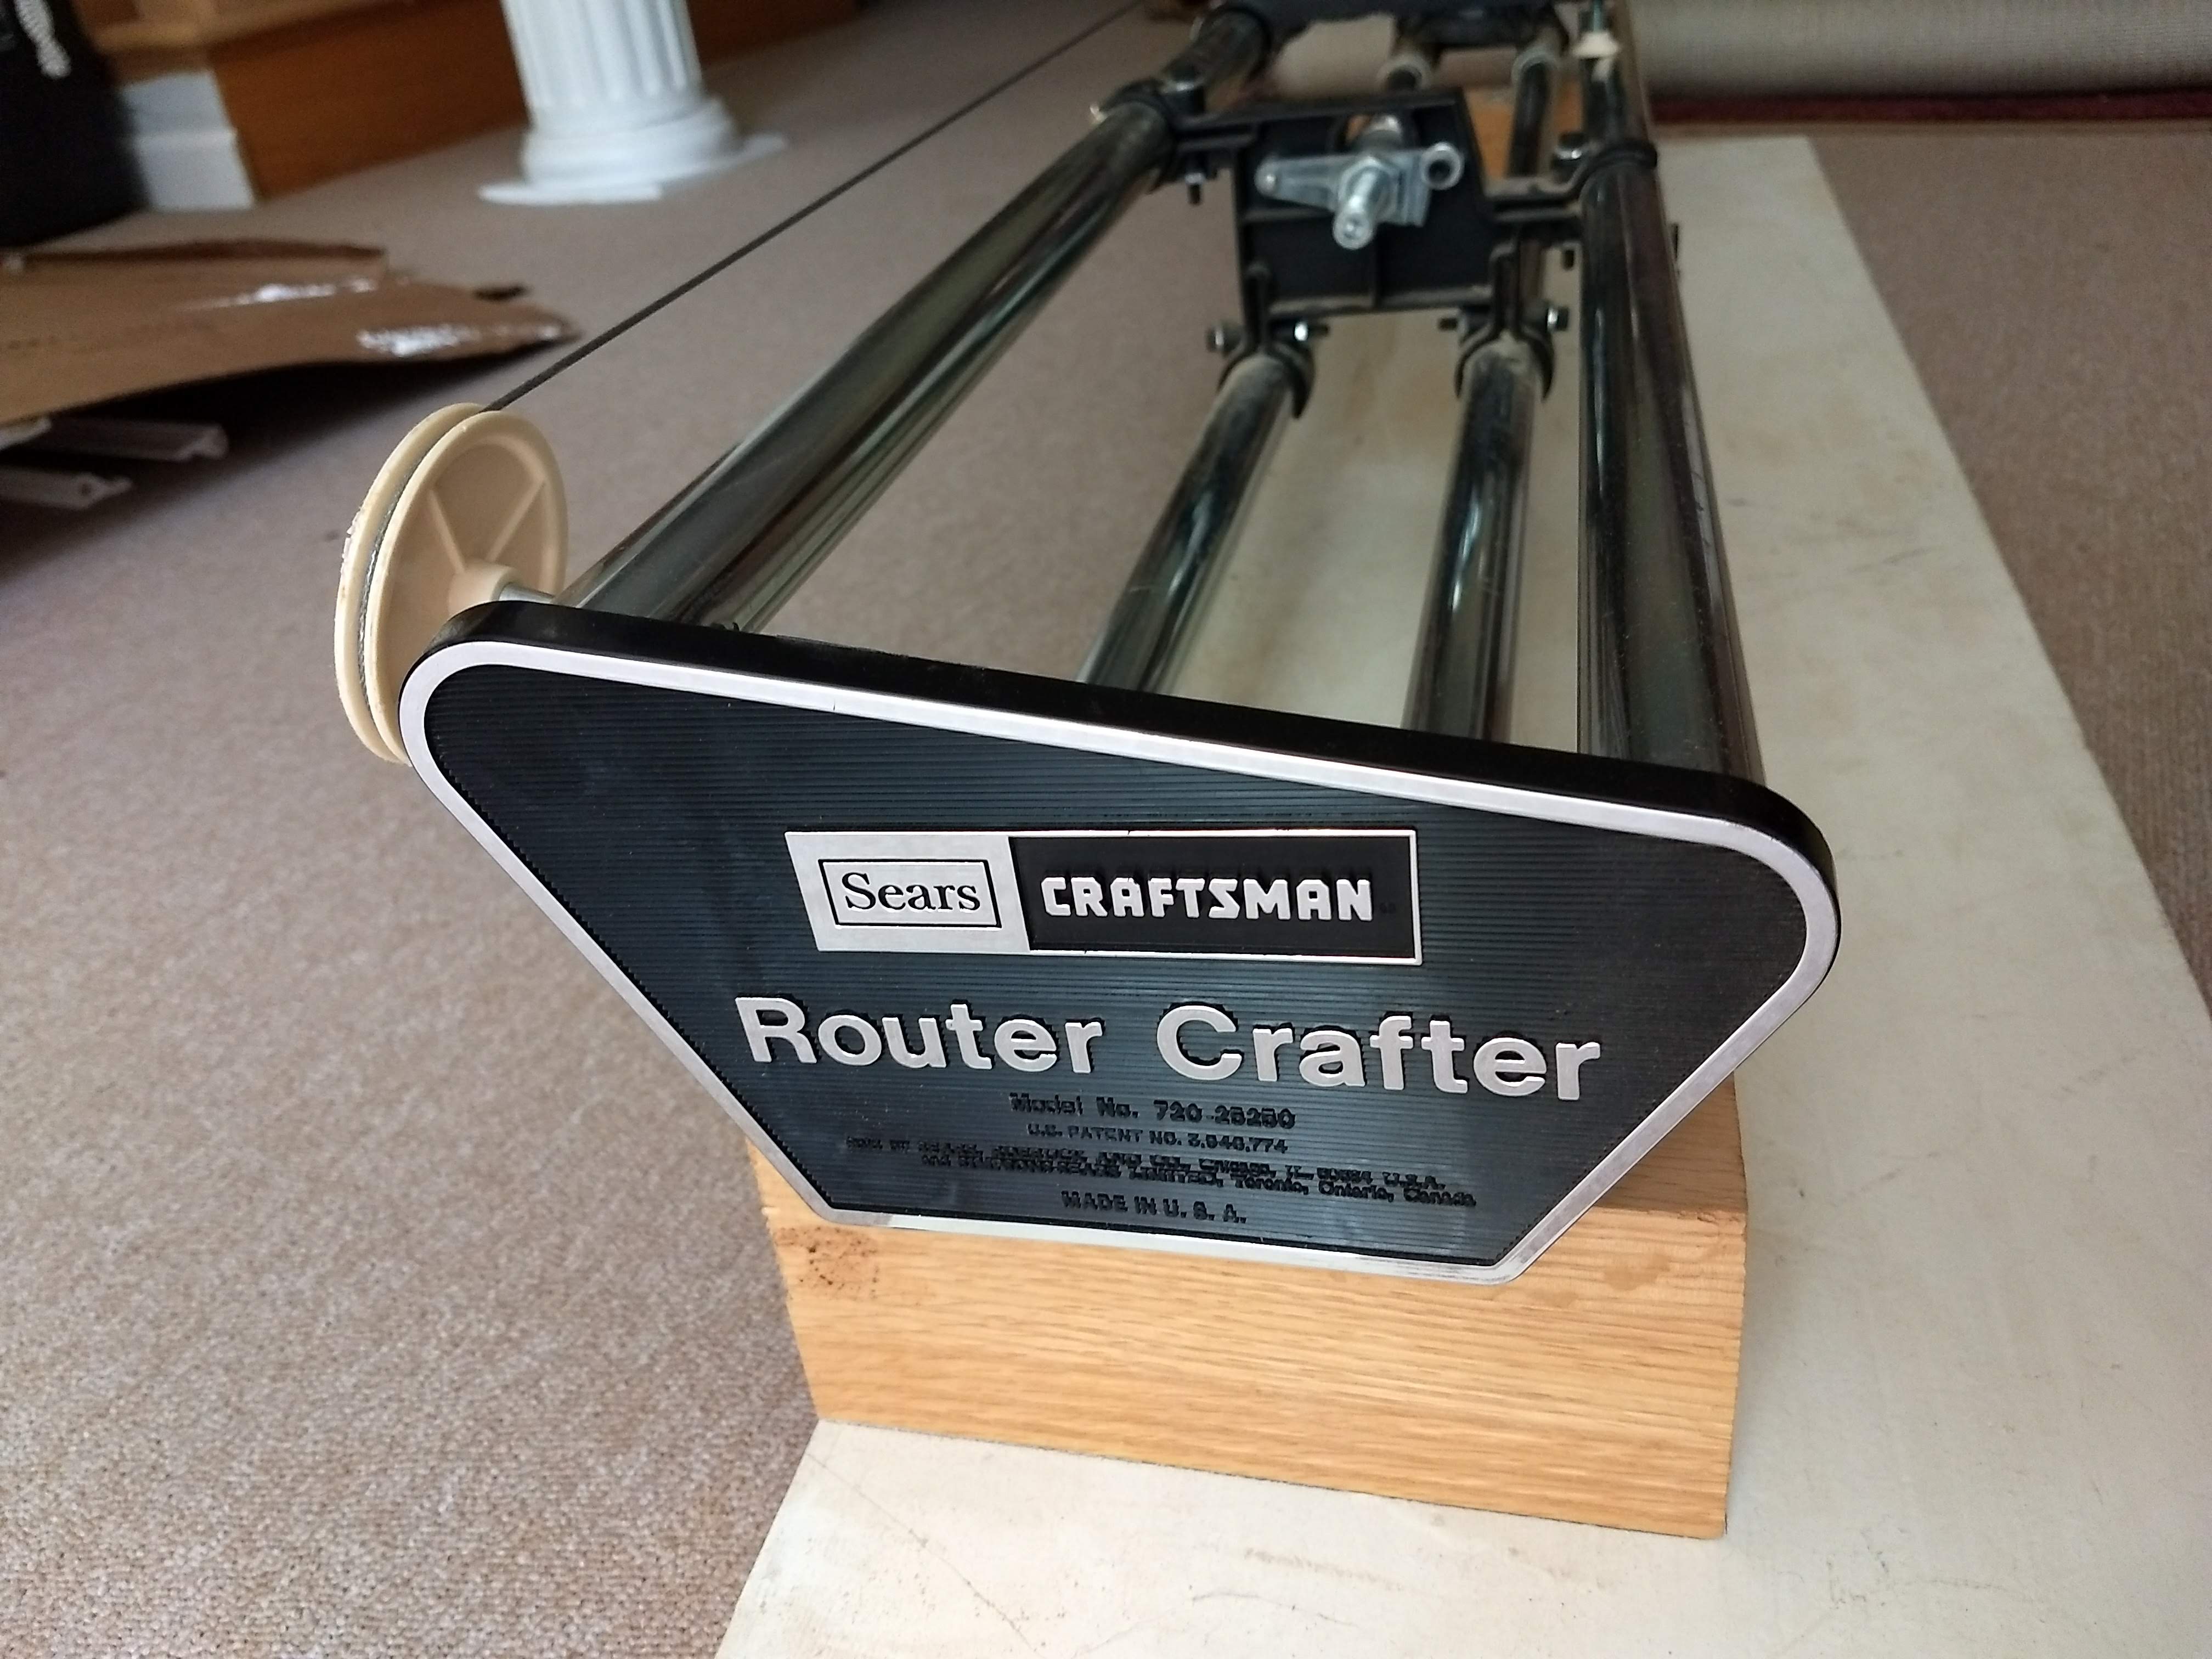 Craftsman Router Crafter | My Fine Stuff